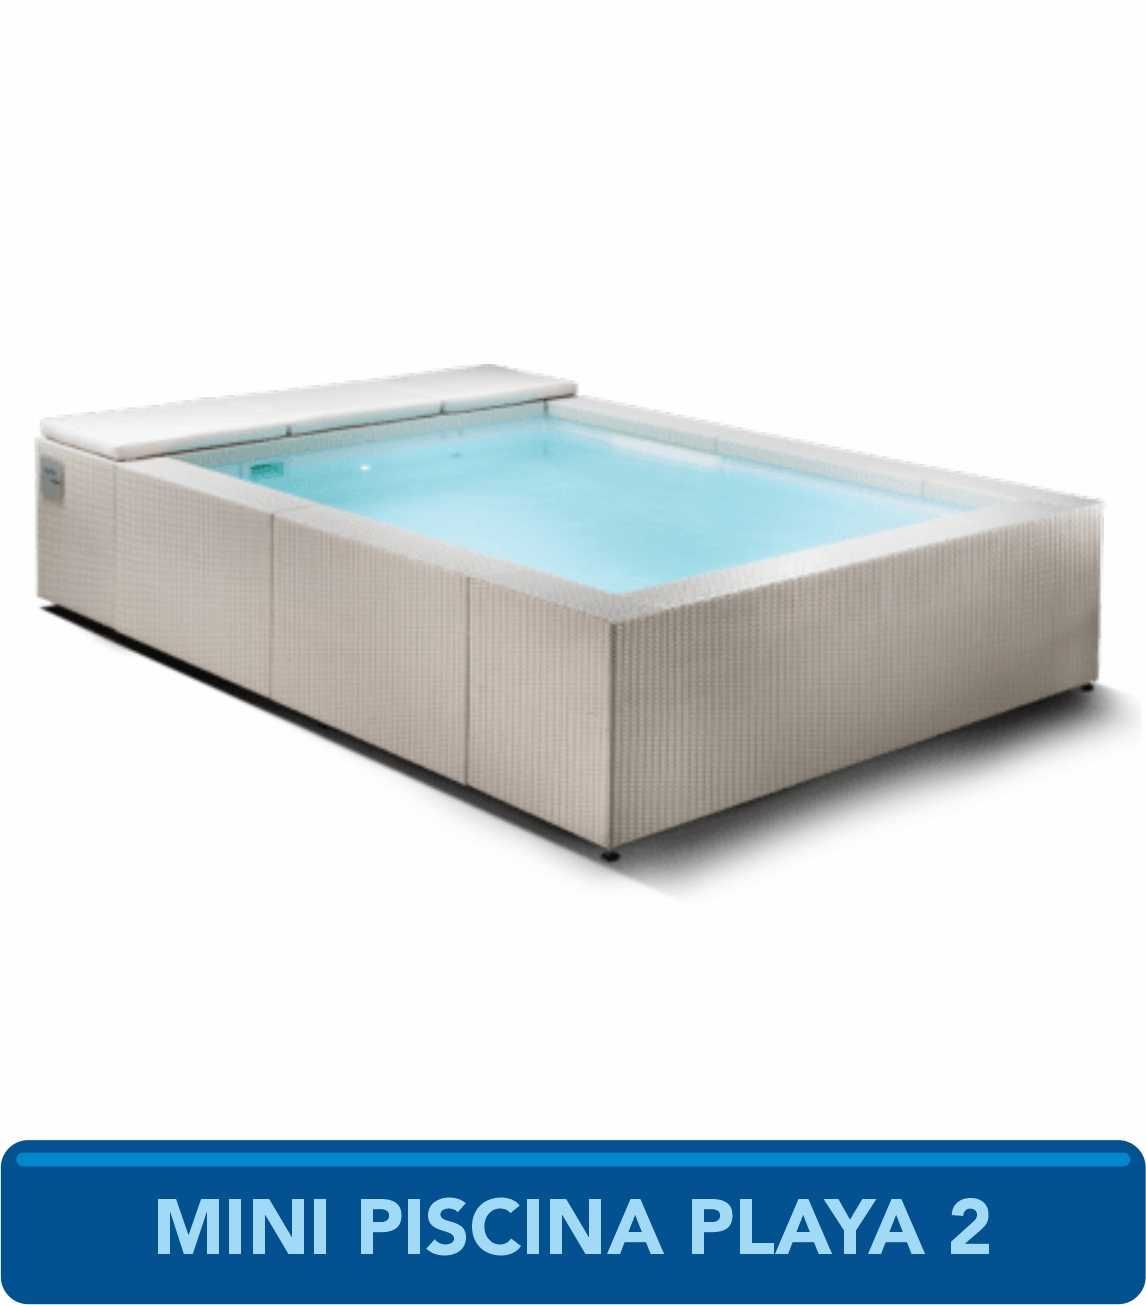 Mini Piscina Playa 2 Laghetto 220cm x320cm x 70cm